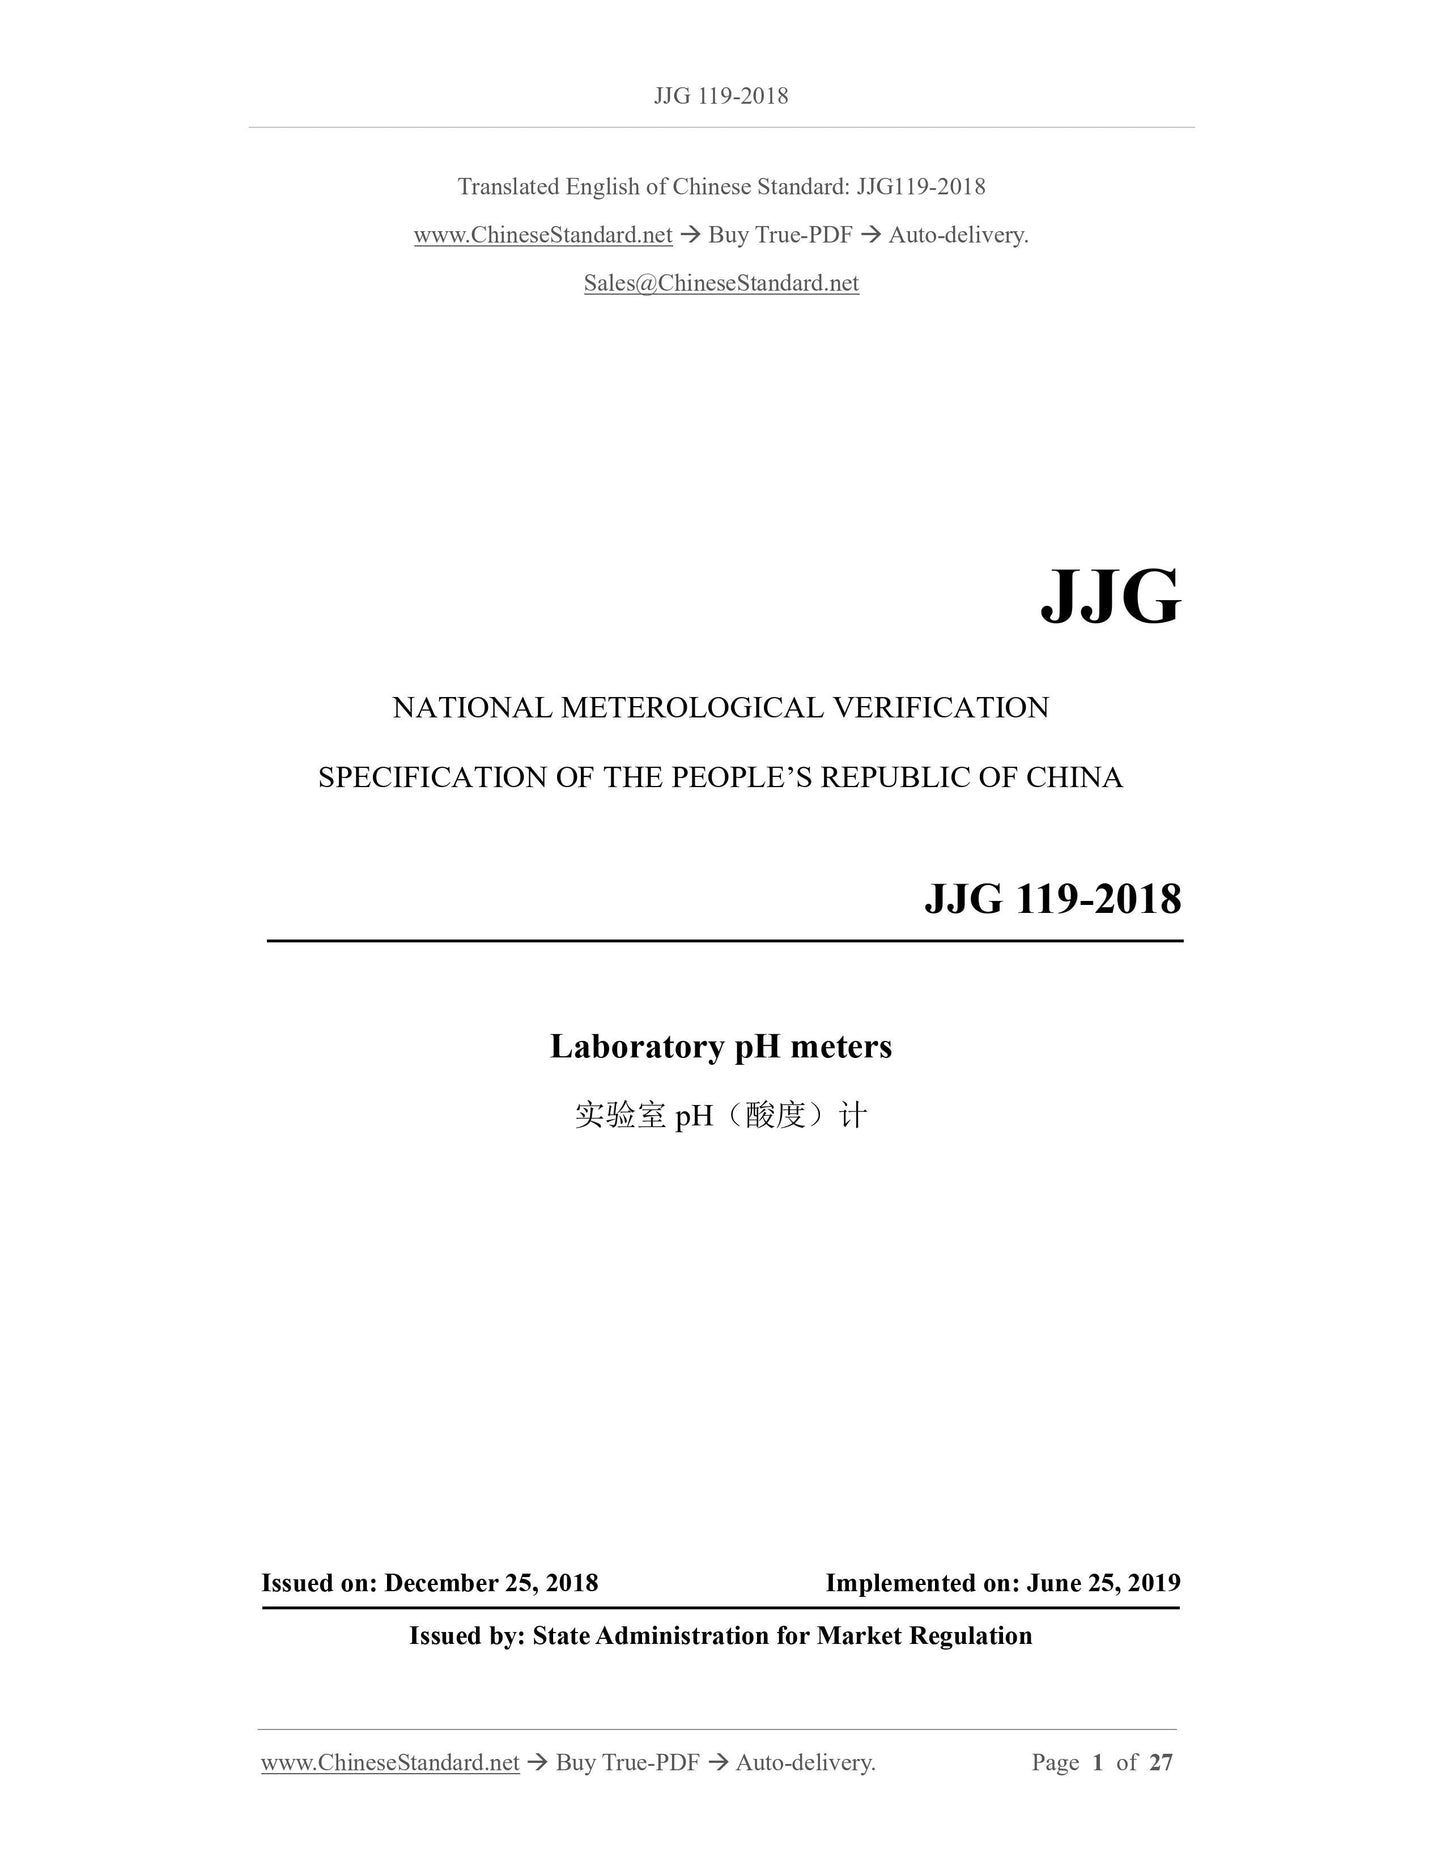 JJG 119-2018 Page 1